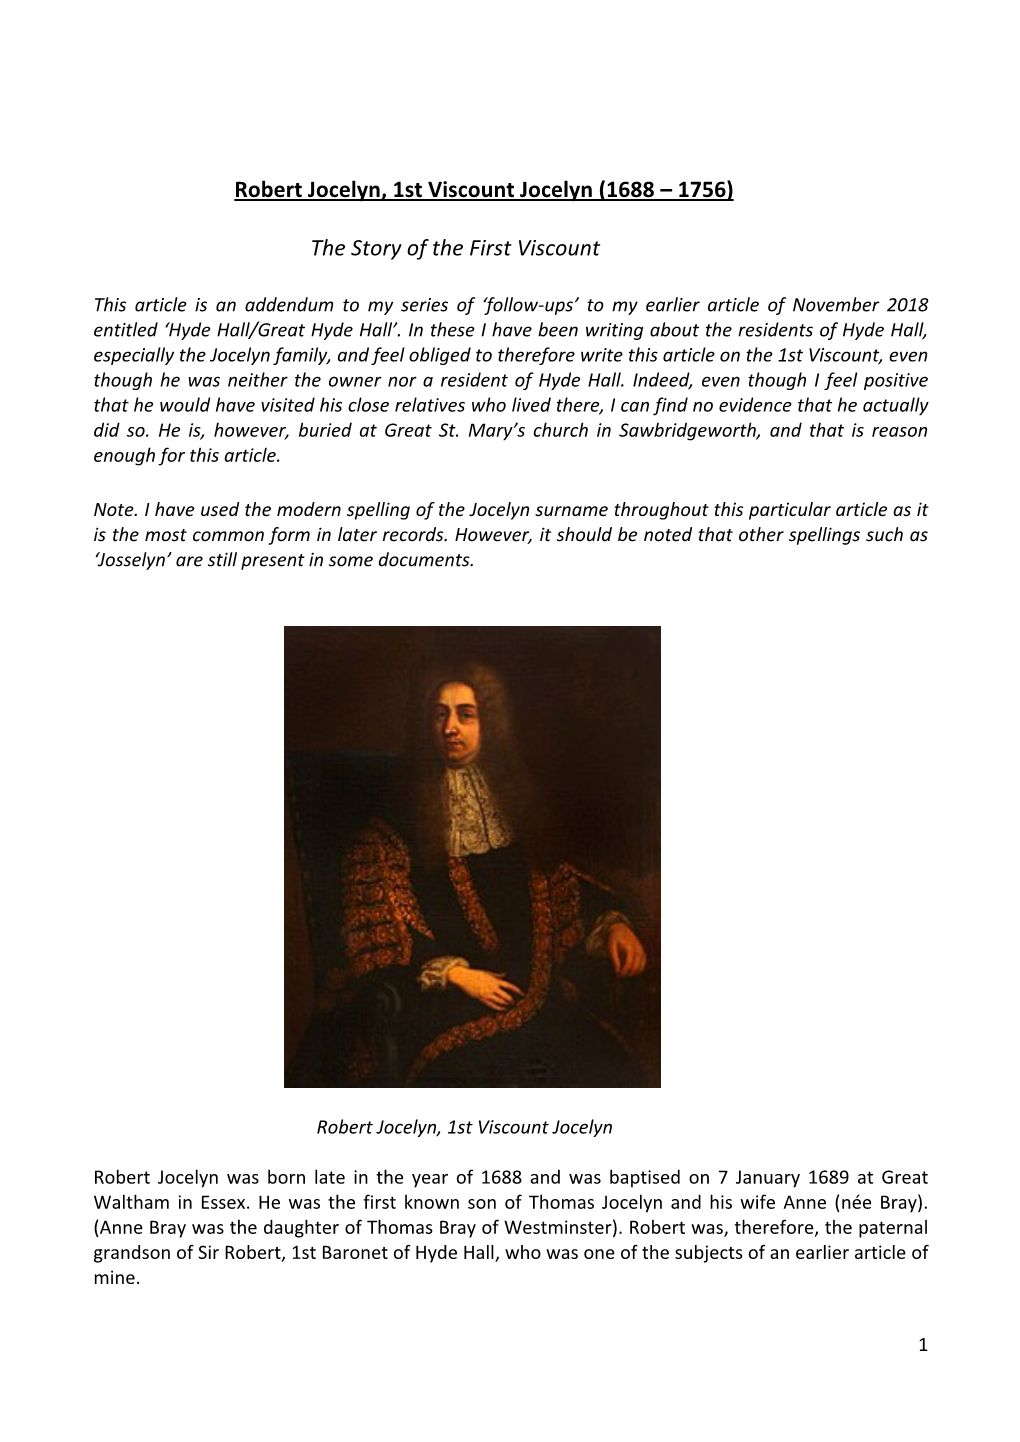 Robert Jocelyn, 1St Viscount Jocelyn (1688 – 1756) the Story of the First